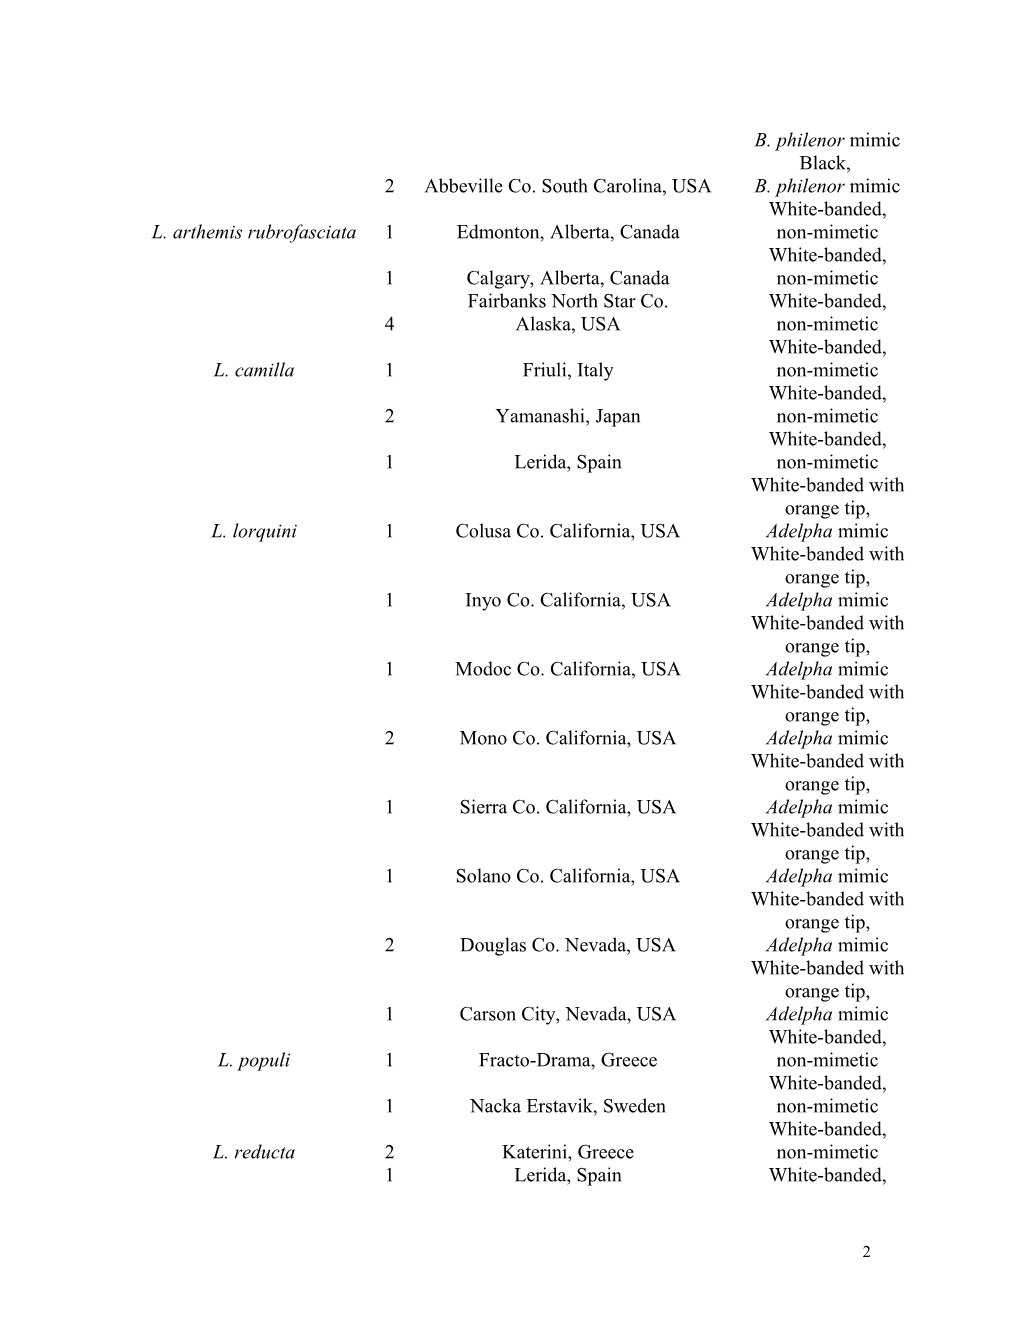 Supplemental Table. Specimen Information for Molecular Phylogeny